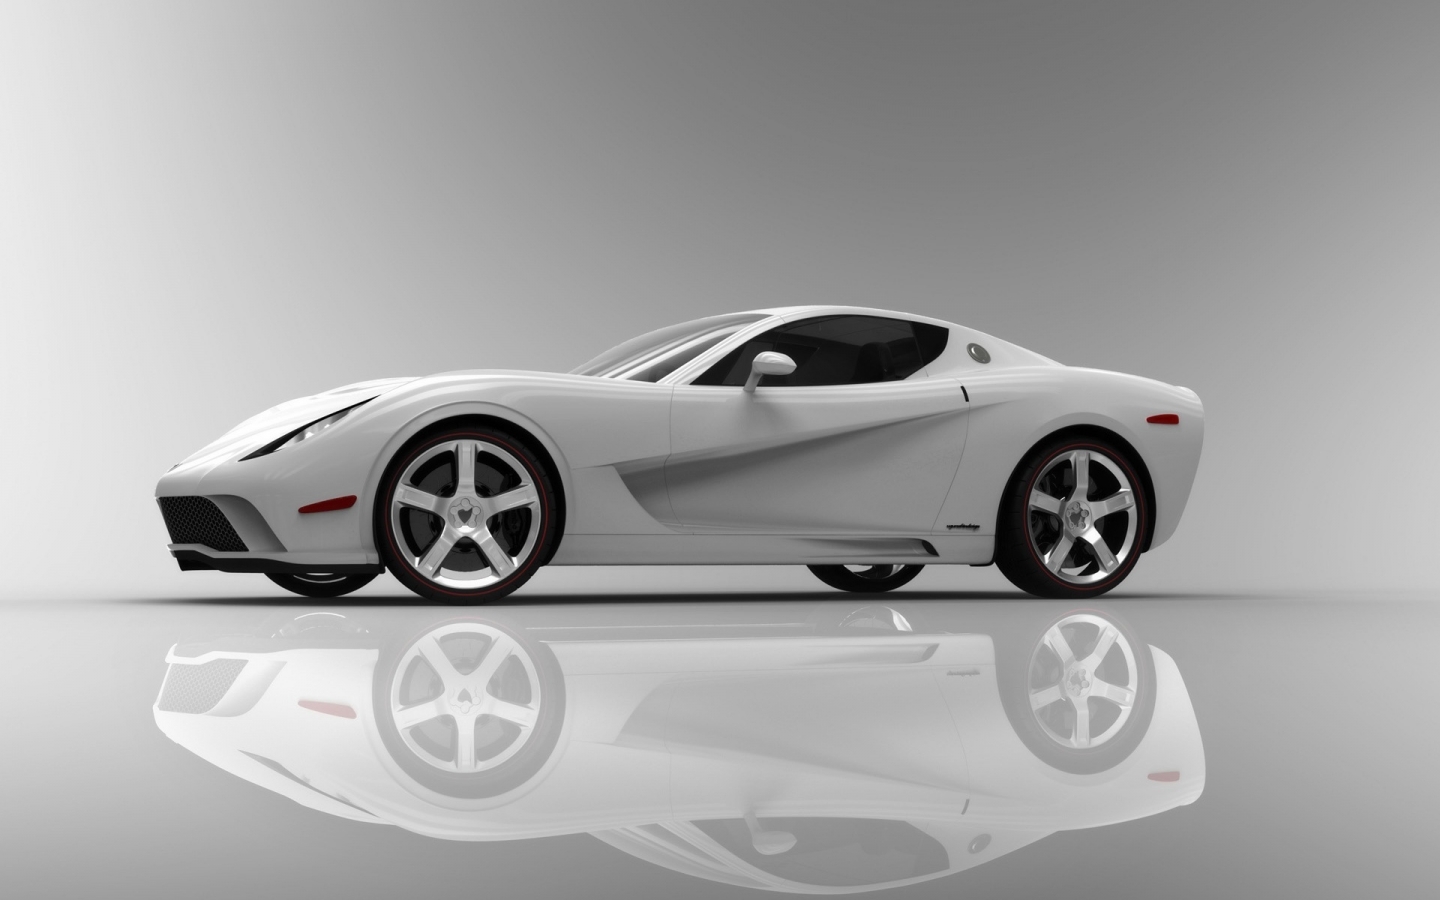 Corvette Z03 2009 White Side Angle for 1440 x 900 widescreen resolution